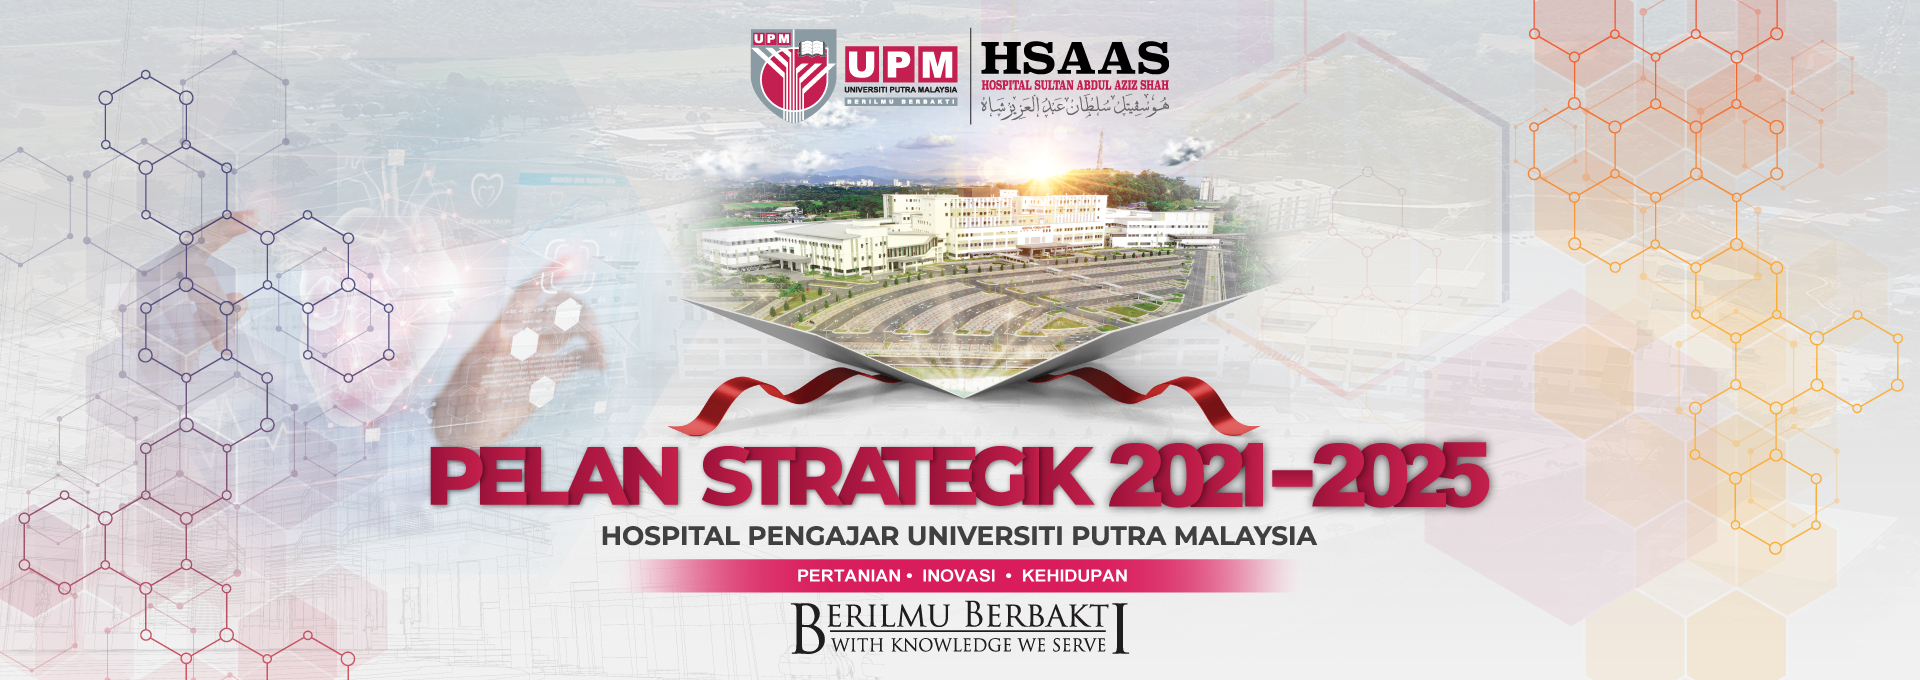 Hospital Pengajar UPM Strategic Planning